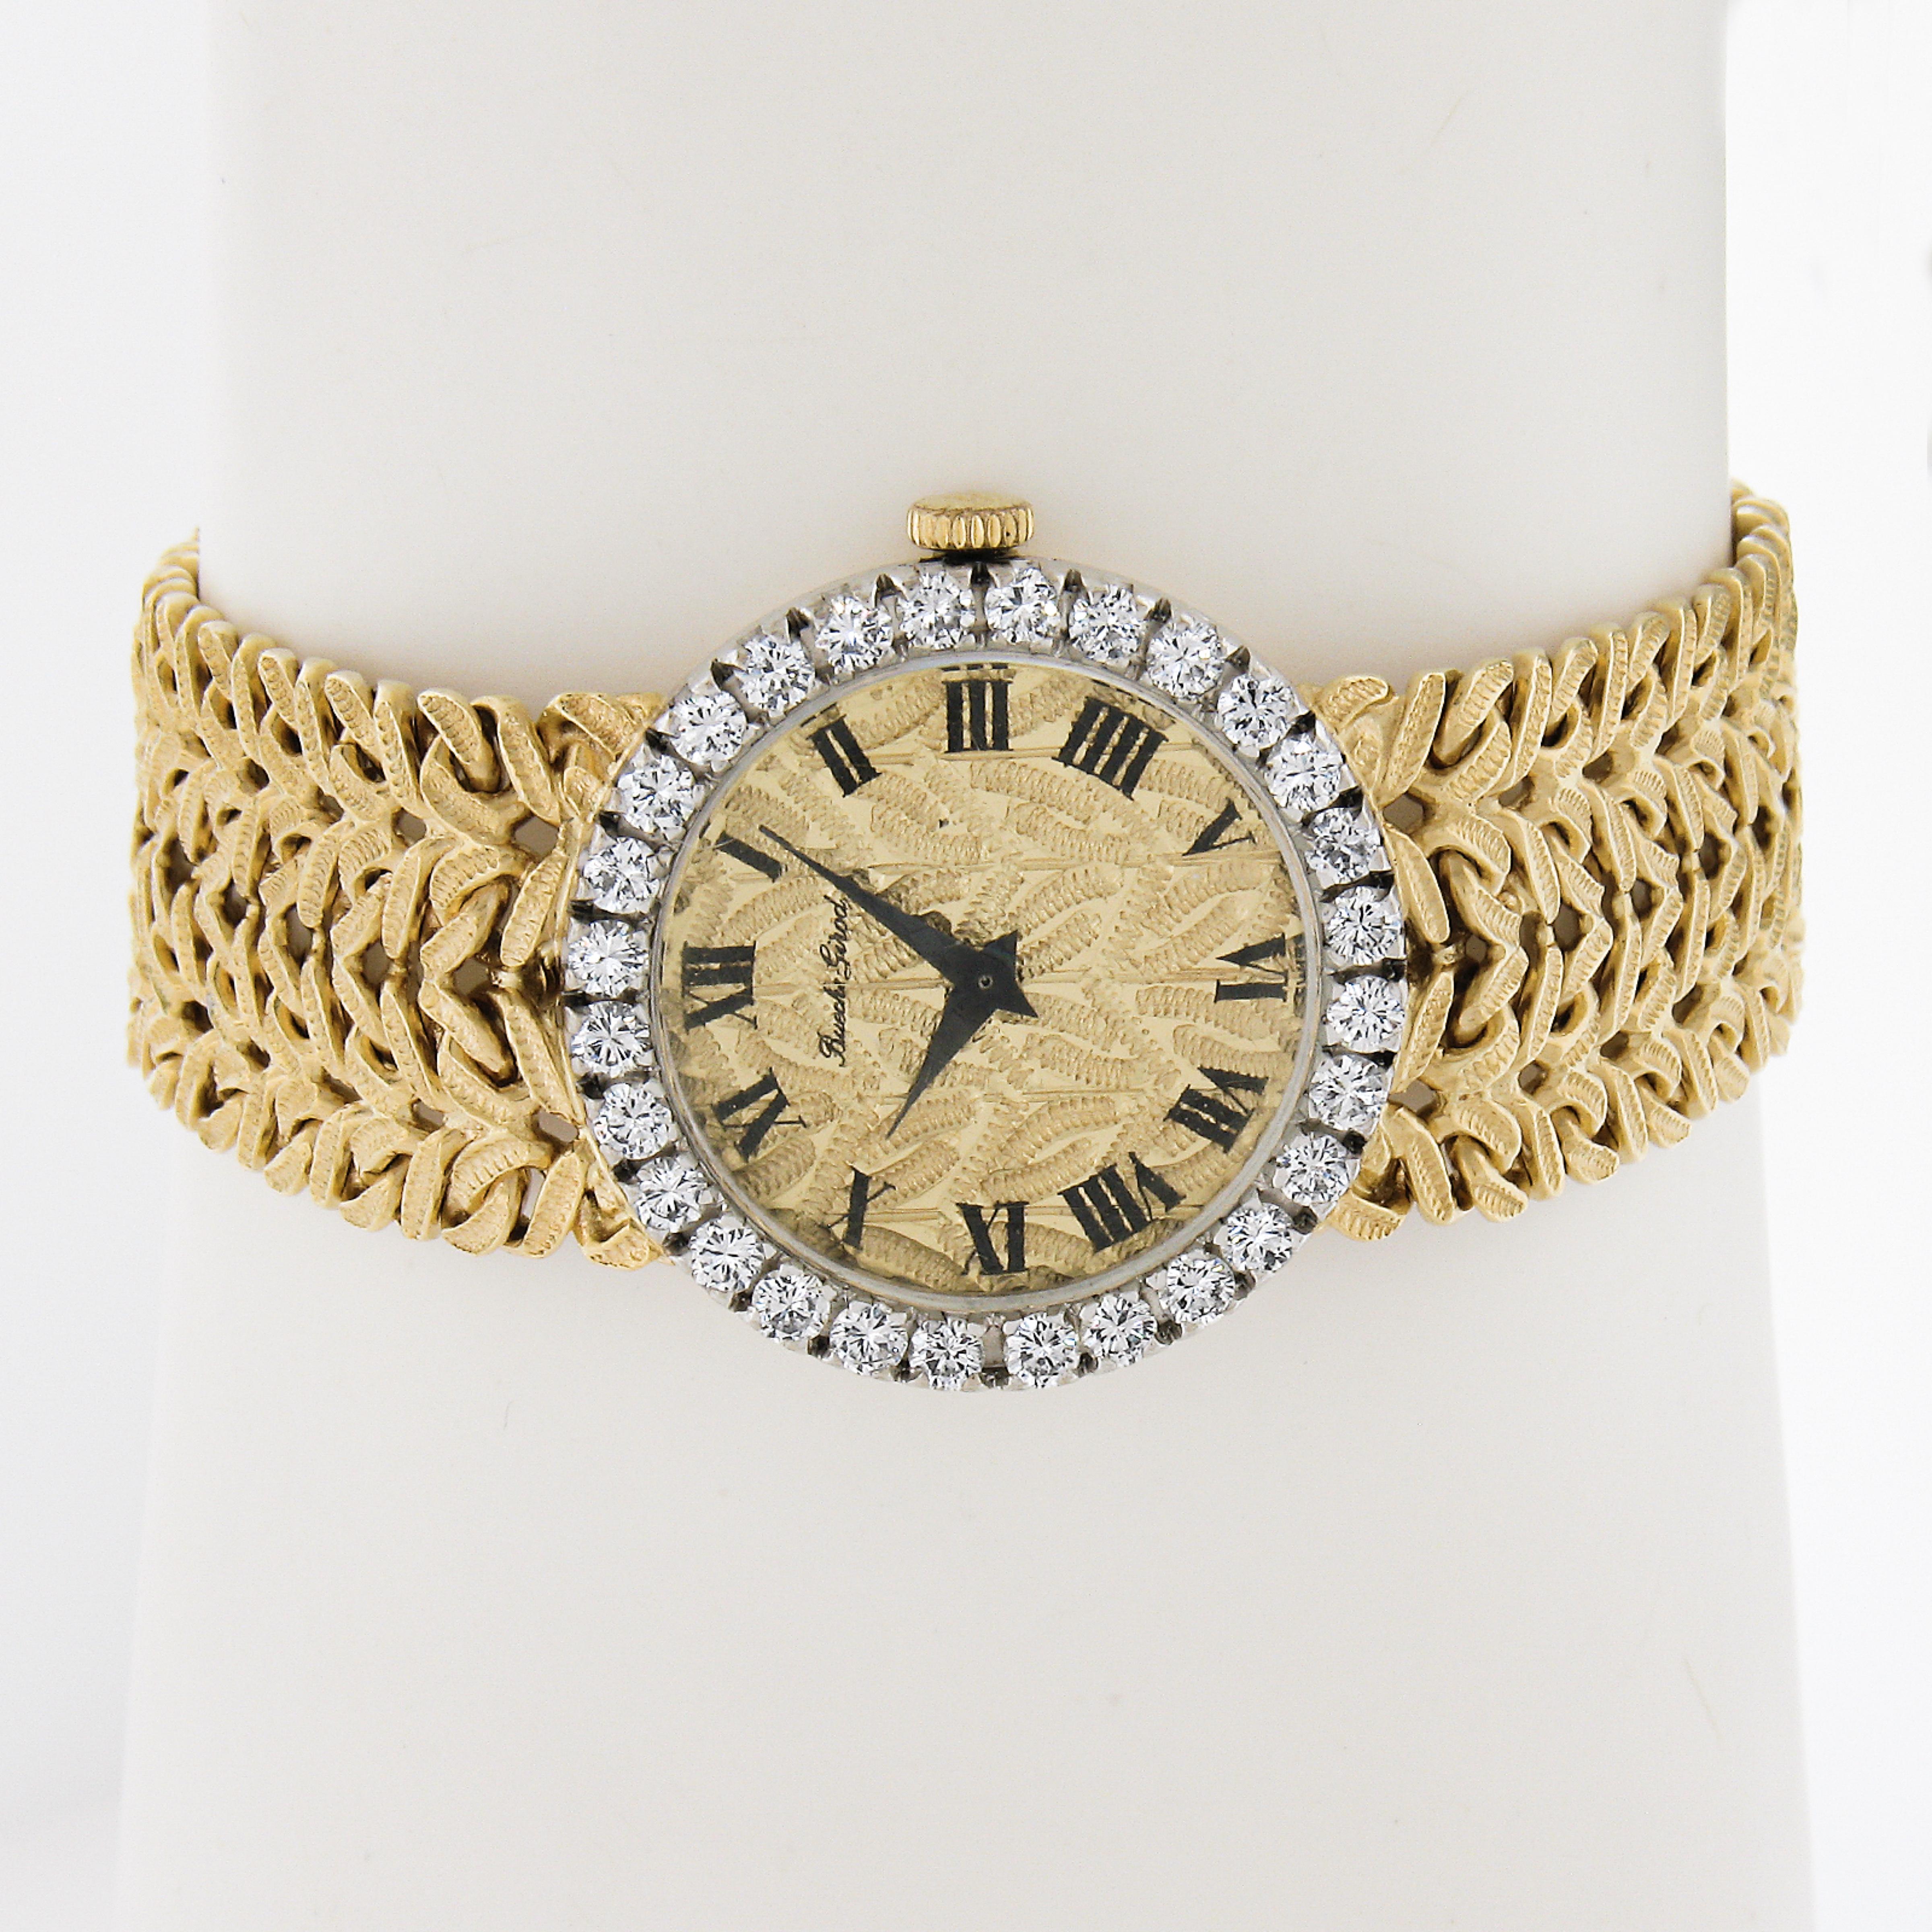 Vintage Bueche Girod 18k Gold 17j Mechanical Round Diamond Wrist Watch Bracelet For Sale 2